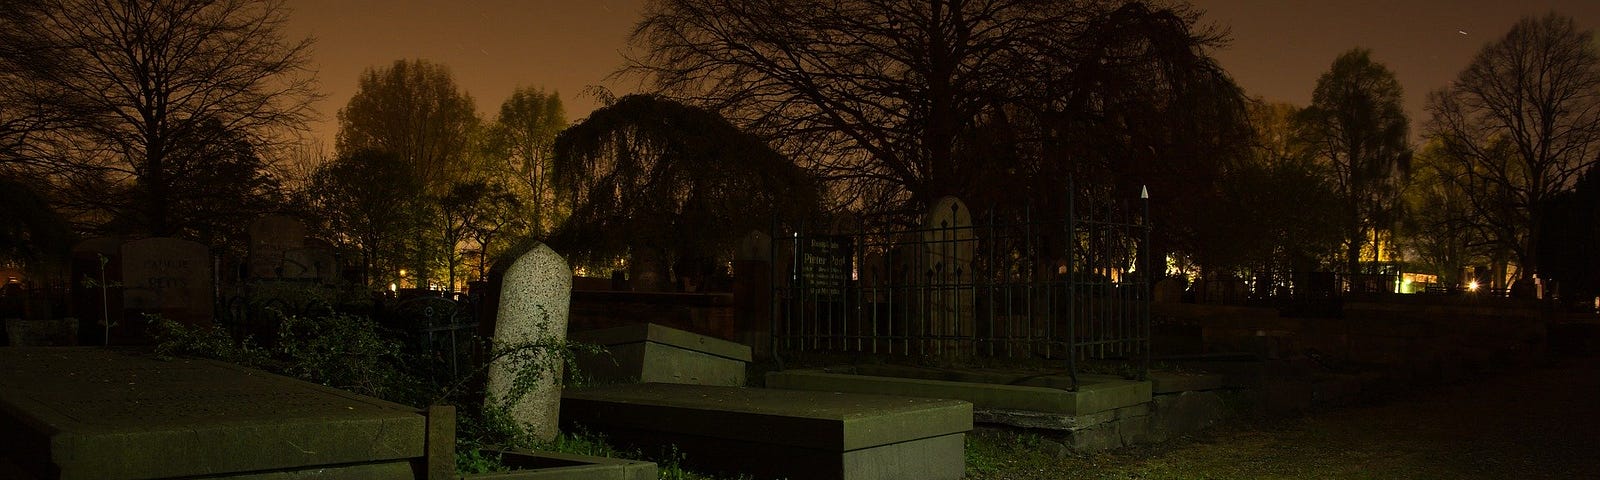 https://pixabay.com/photos/graveyard-graves-tree-spooky-night-384604/